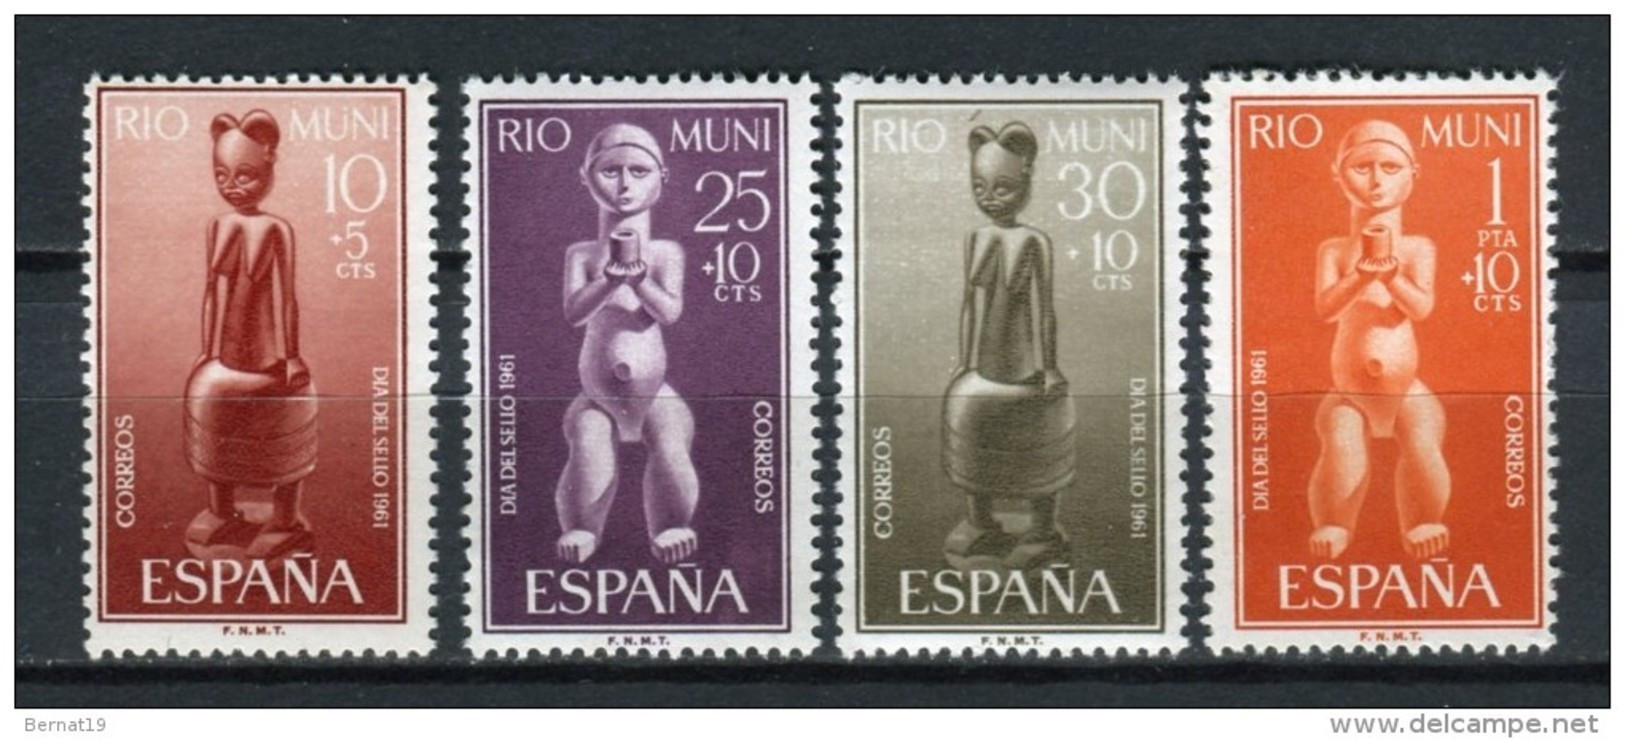 Rio Muni 1961. Edifil 25-28 ** MNH. - Rio Muni